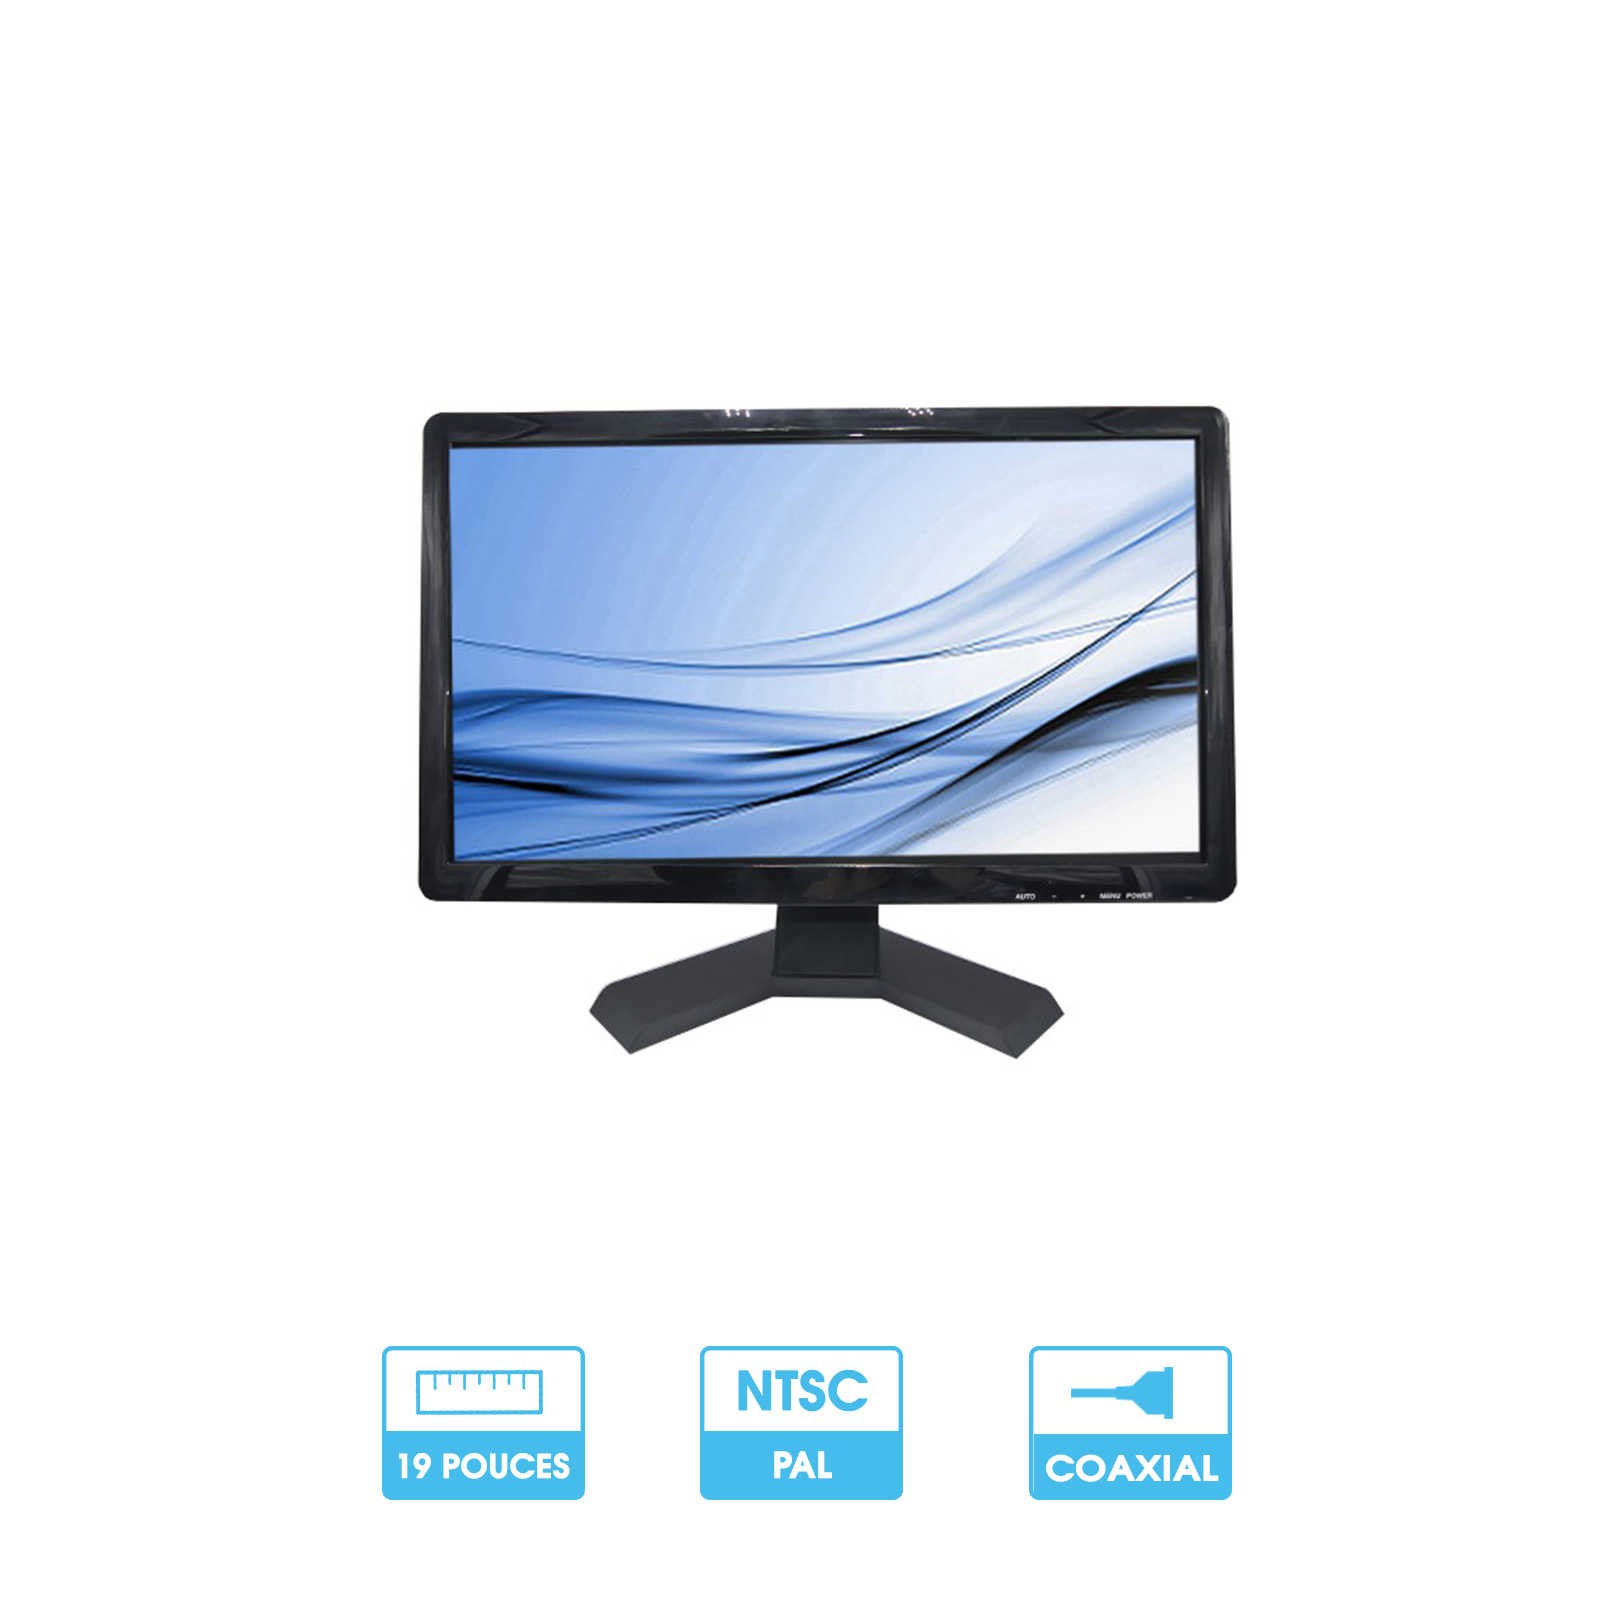 Ecran LCD de vidéosurveillance 19 pouces | 16:9 Full HD | Entrées BNC / AV / VGA et HDMI